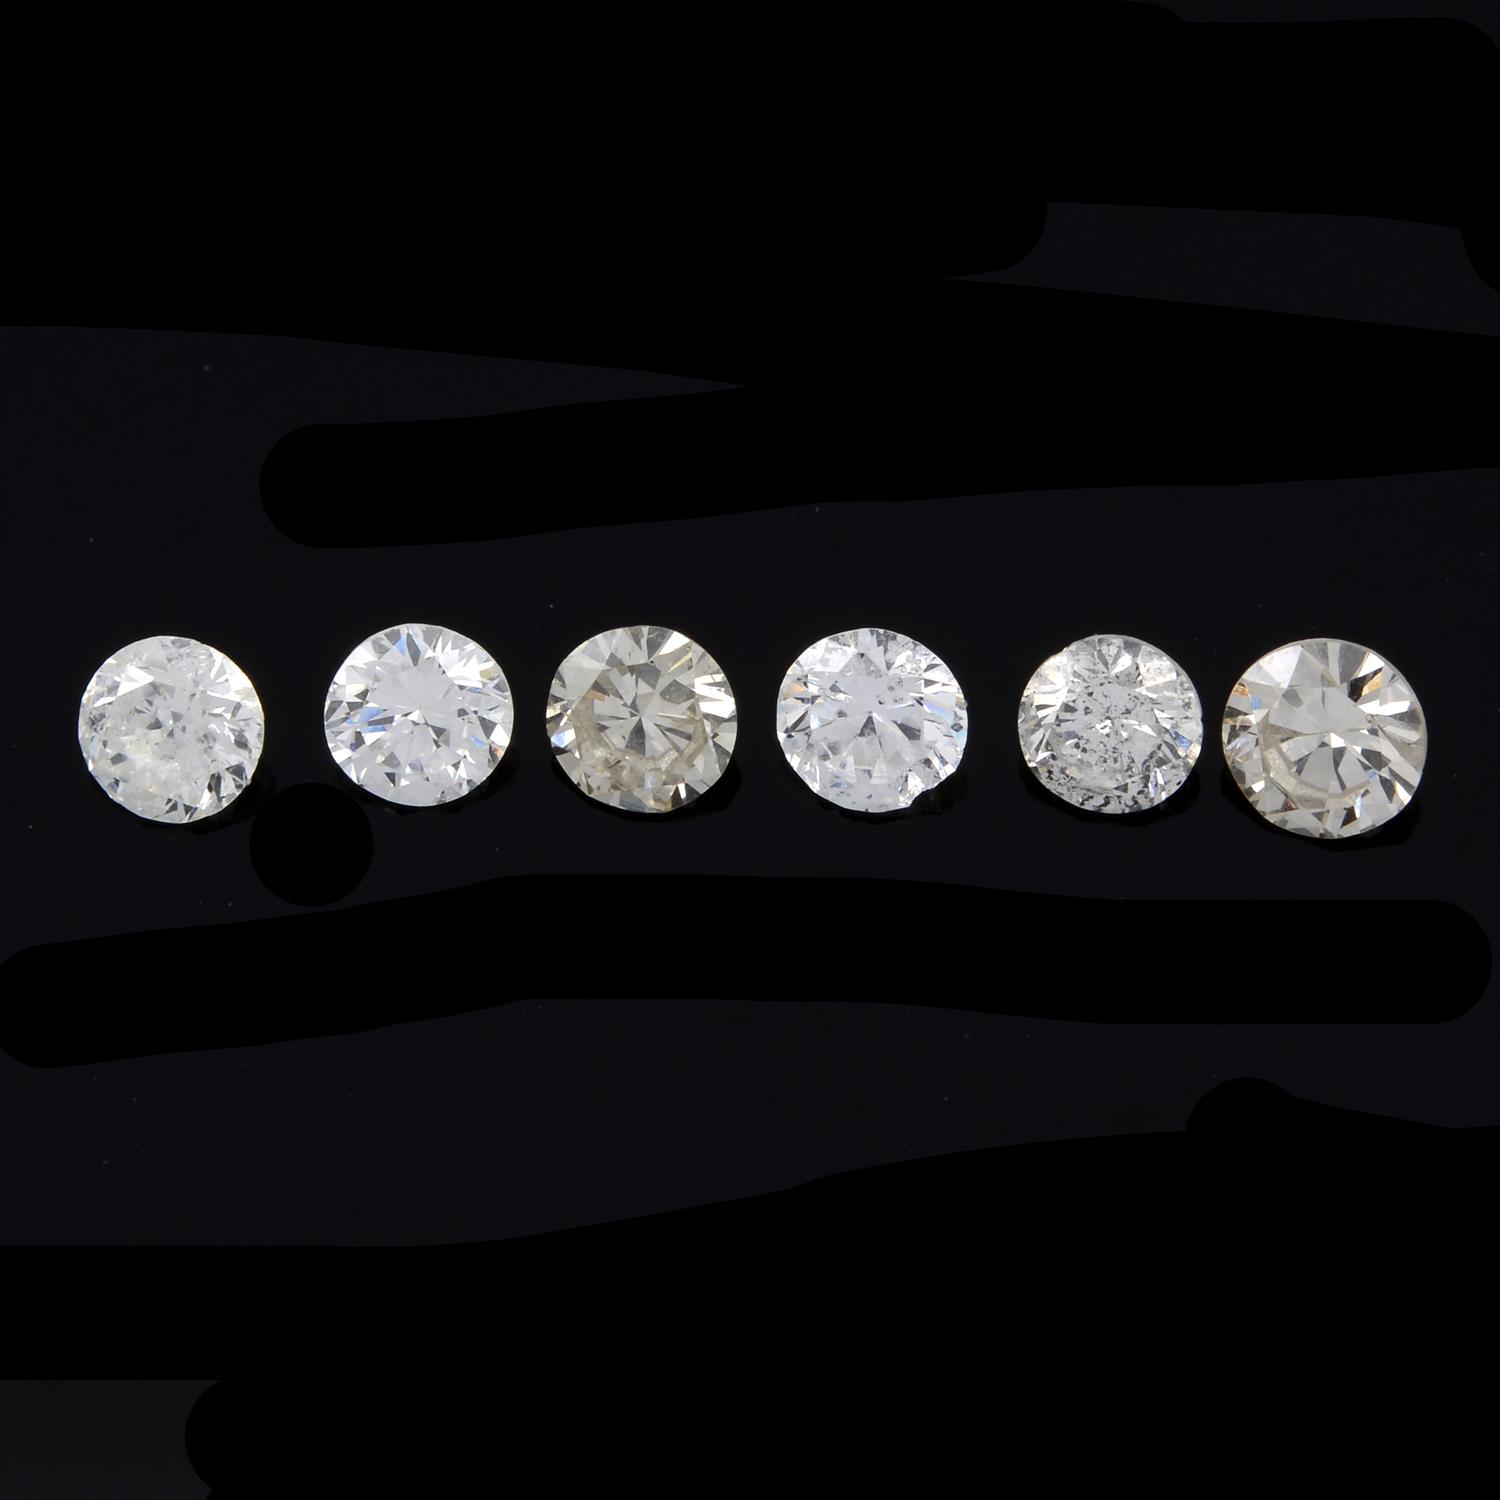 Six brilliant-cut diamonds, 1.07ct